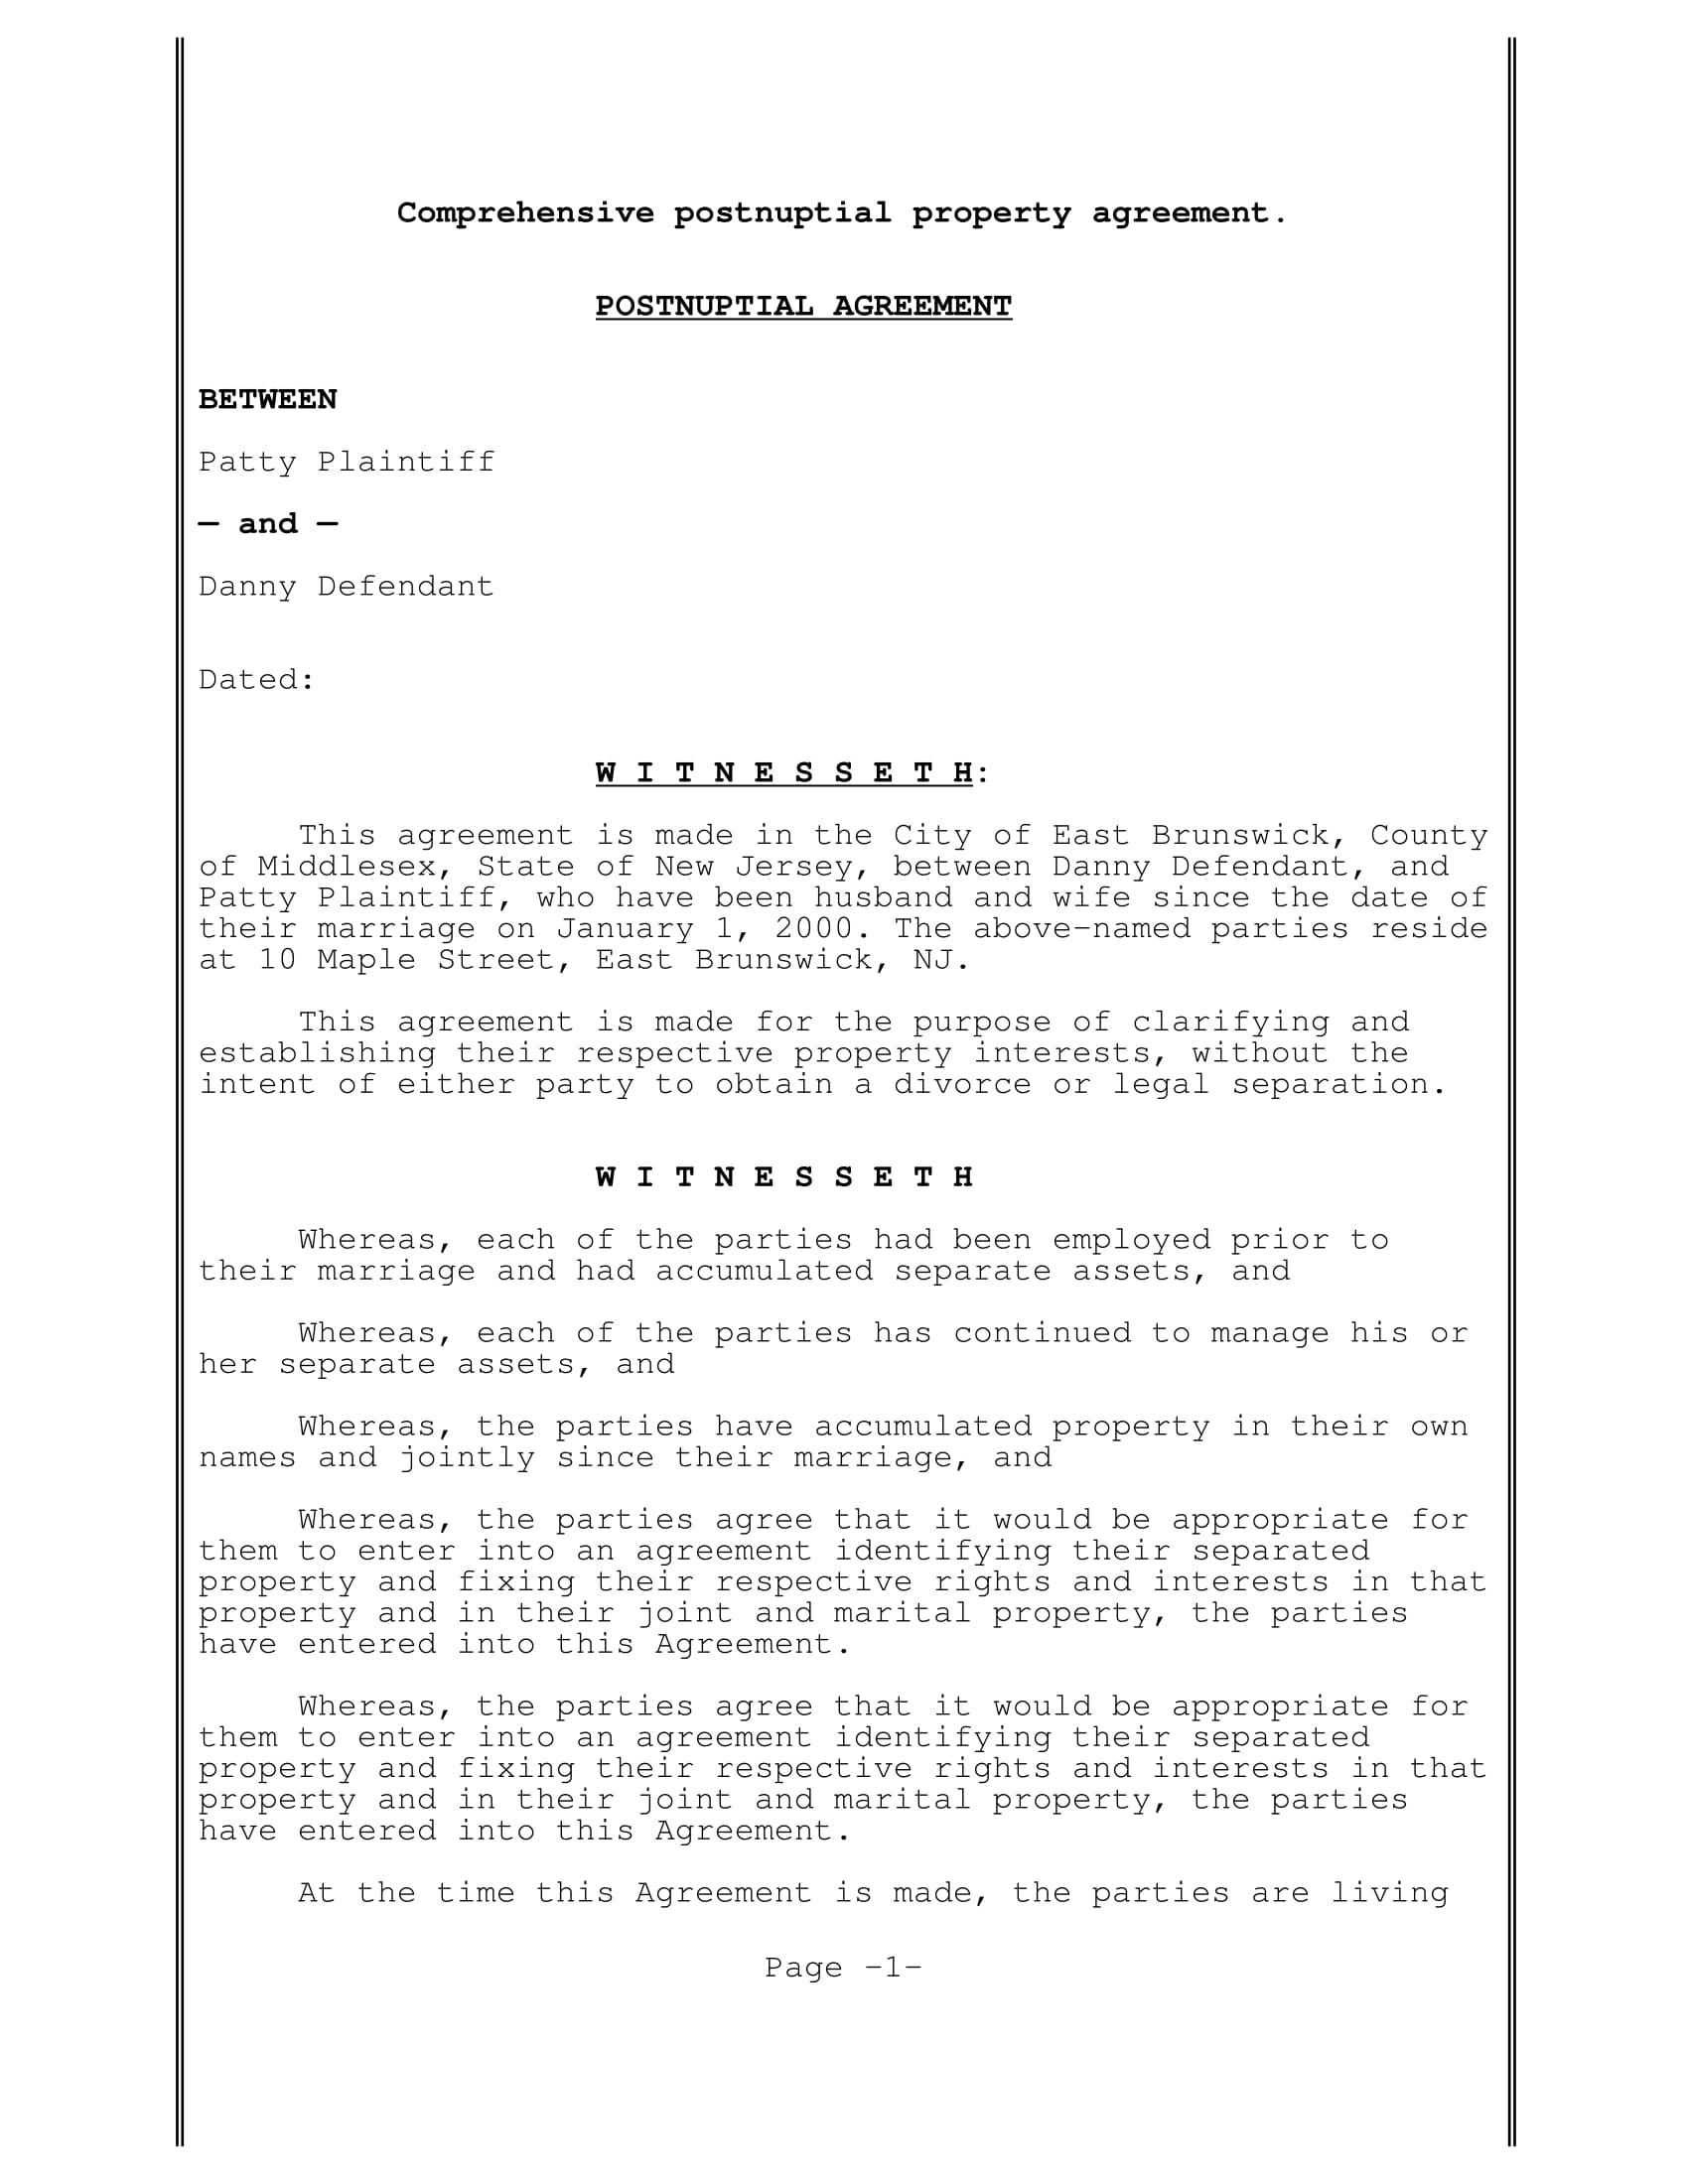 postnuptial agreement form 01